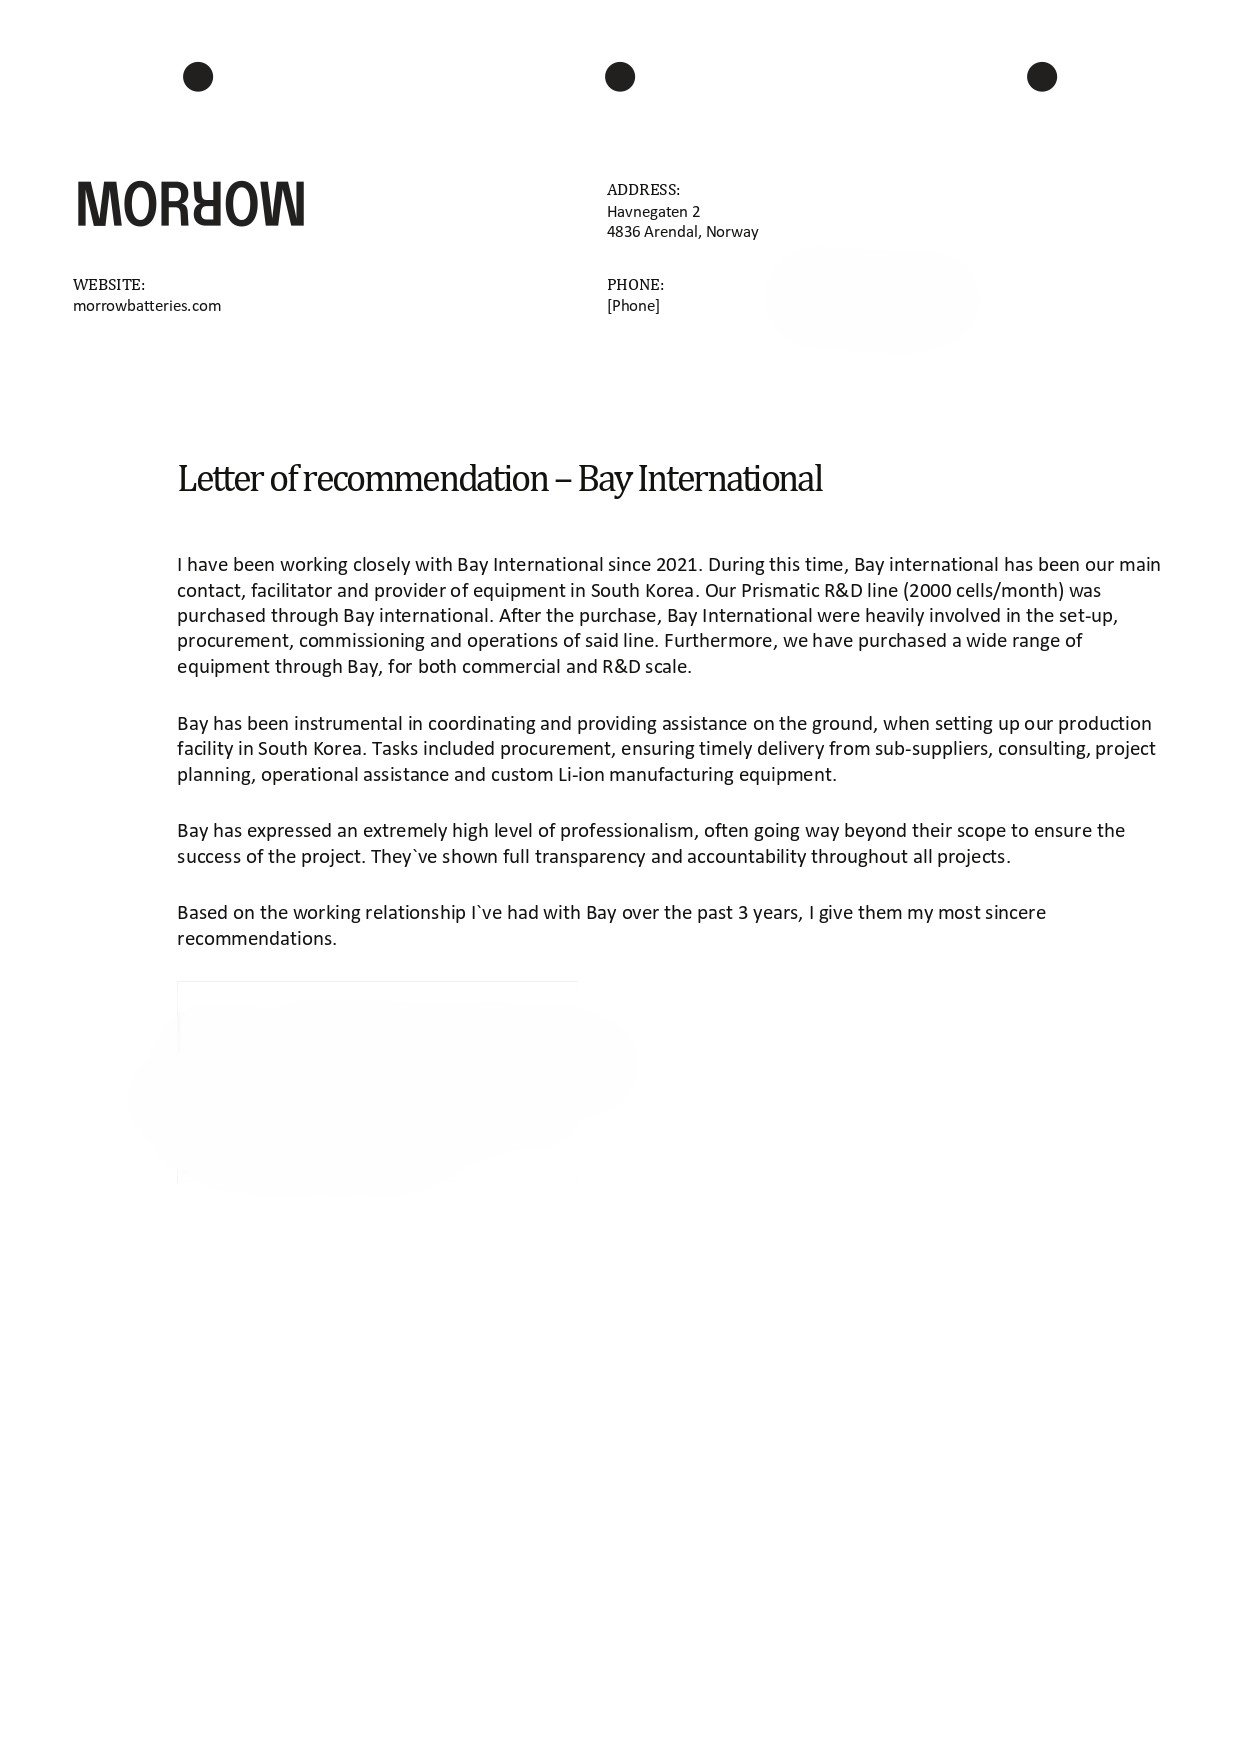 Letter_of_reccomendation_Bay.jpg